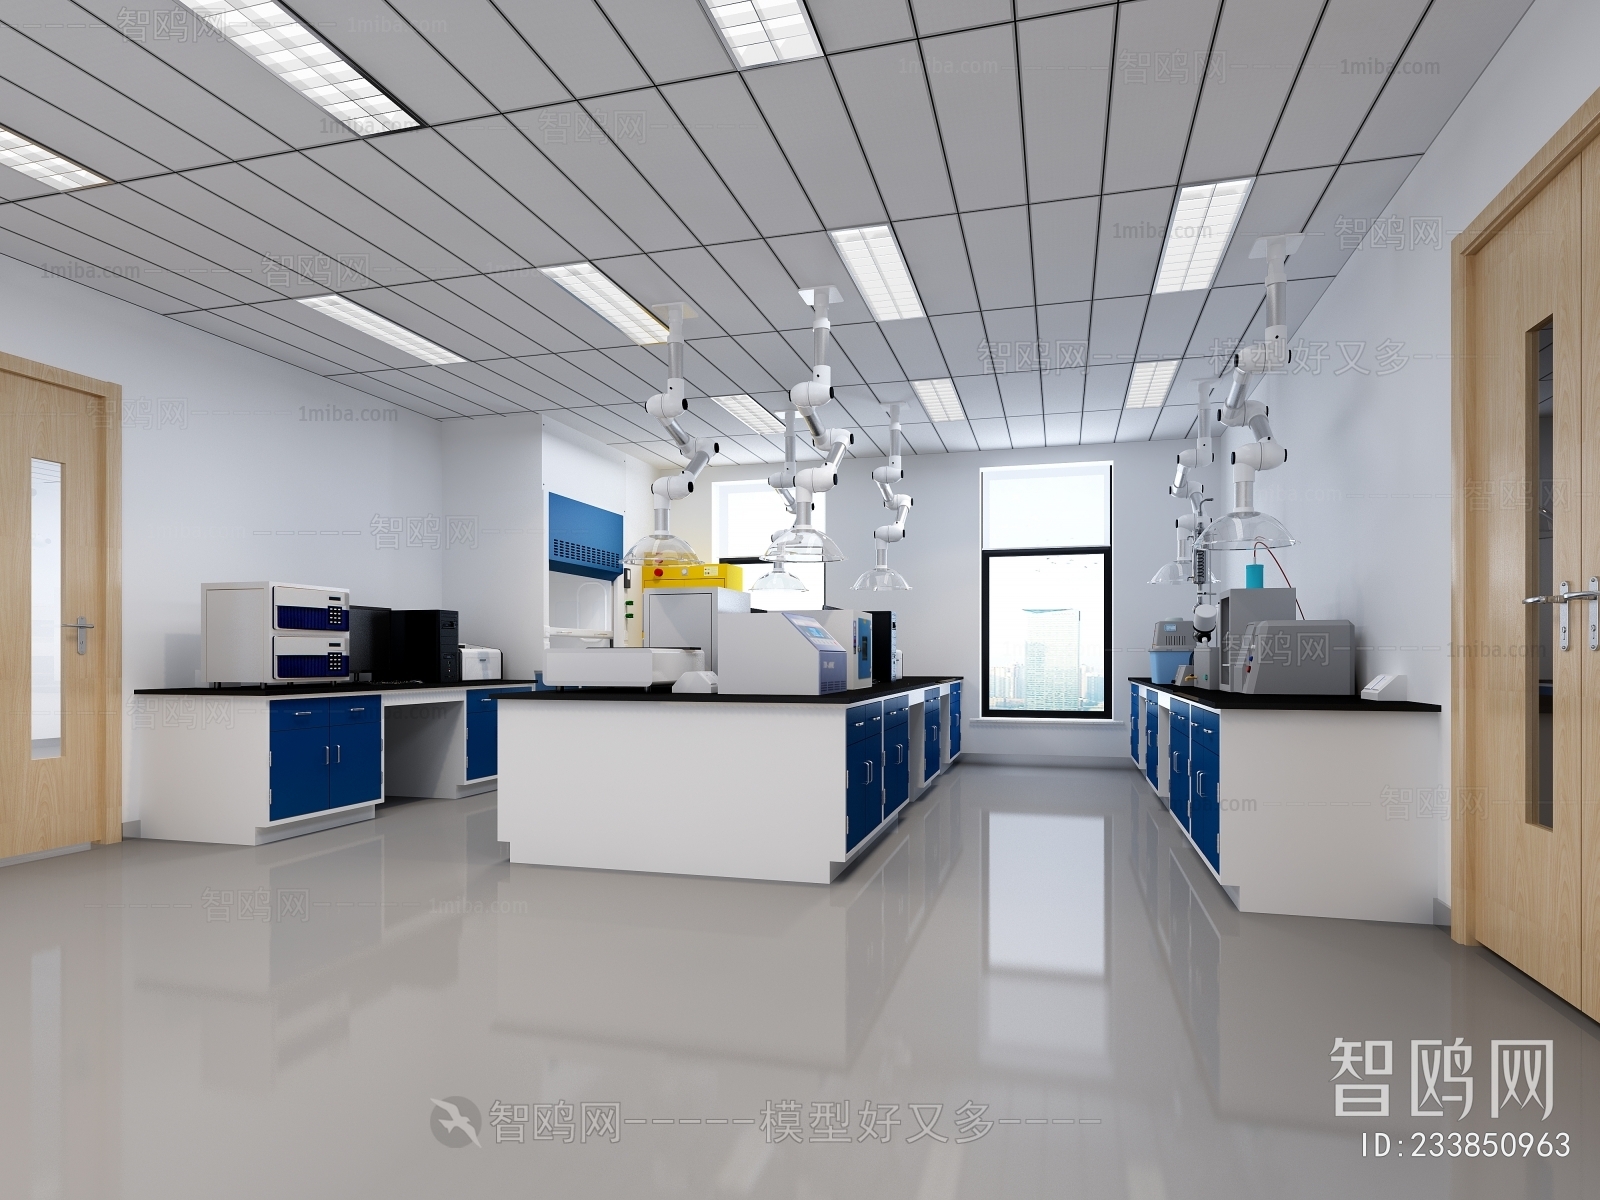 Modern Laboratory